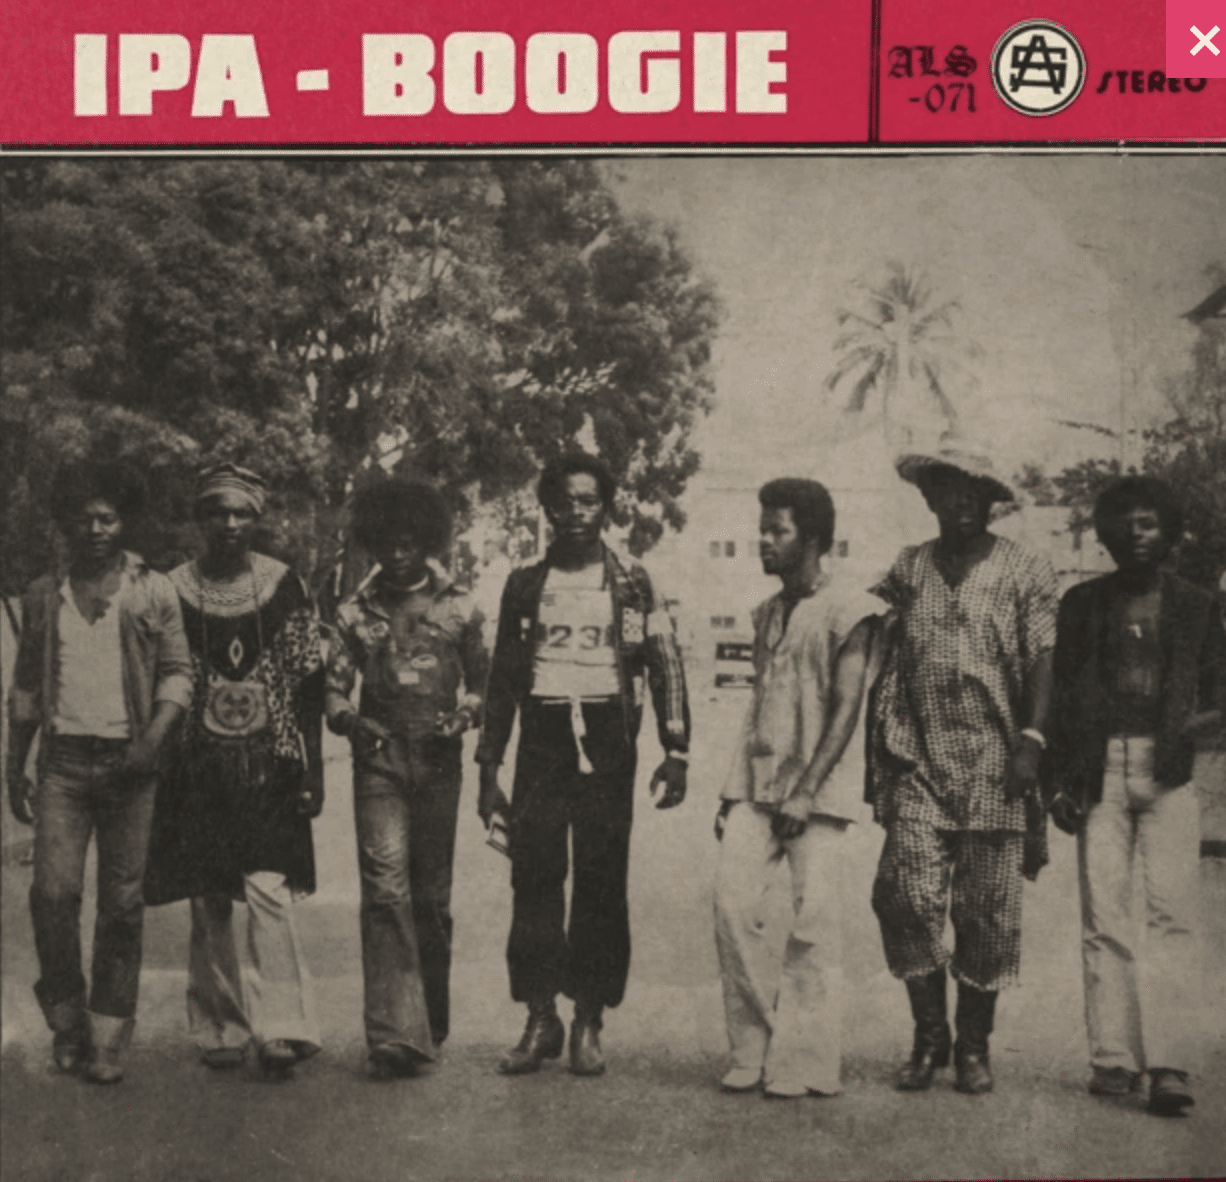 IPA - BOOGIE IPA - Boogie